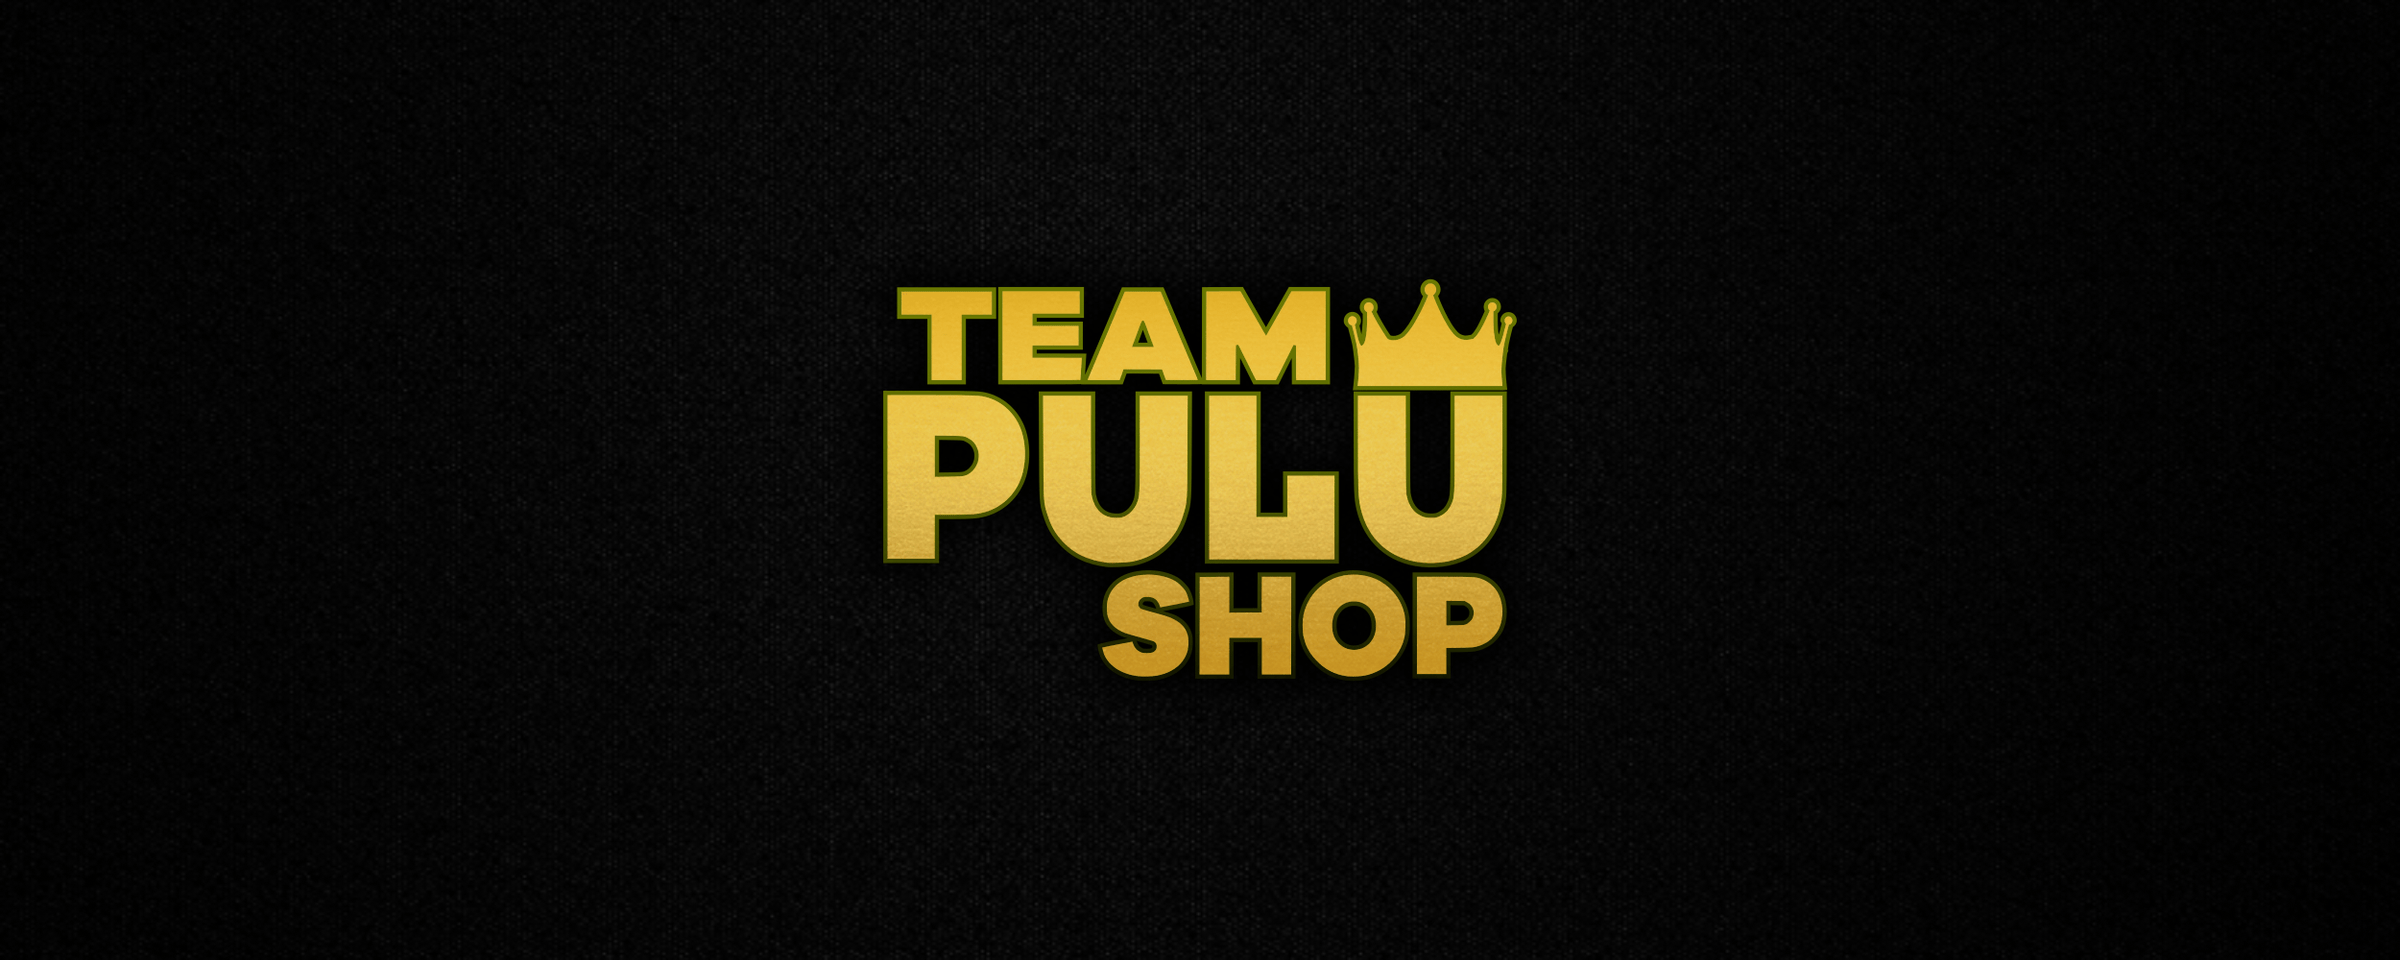 teampulu shop